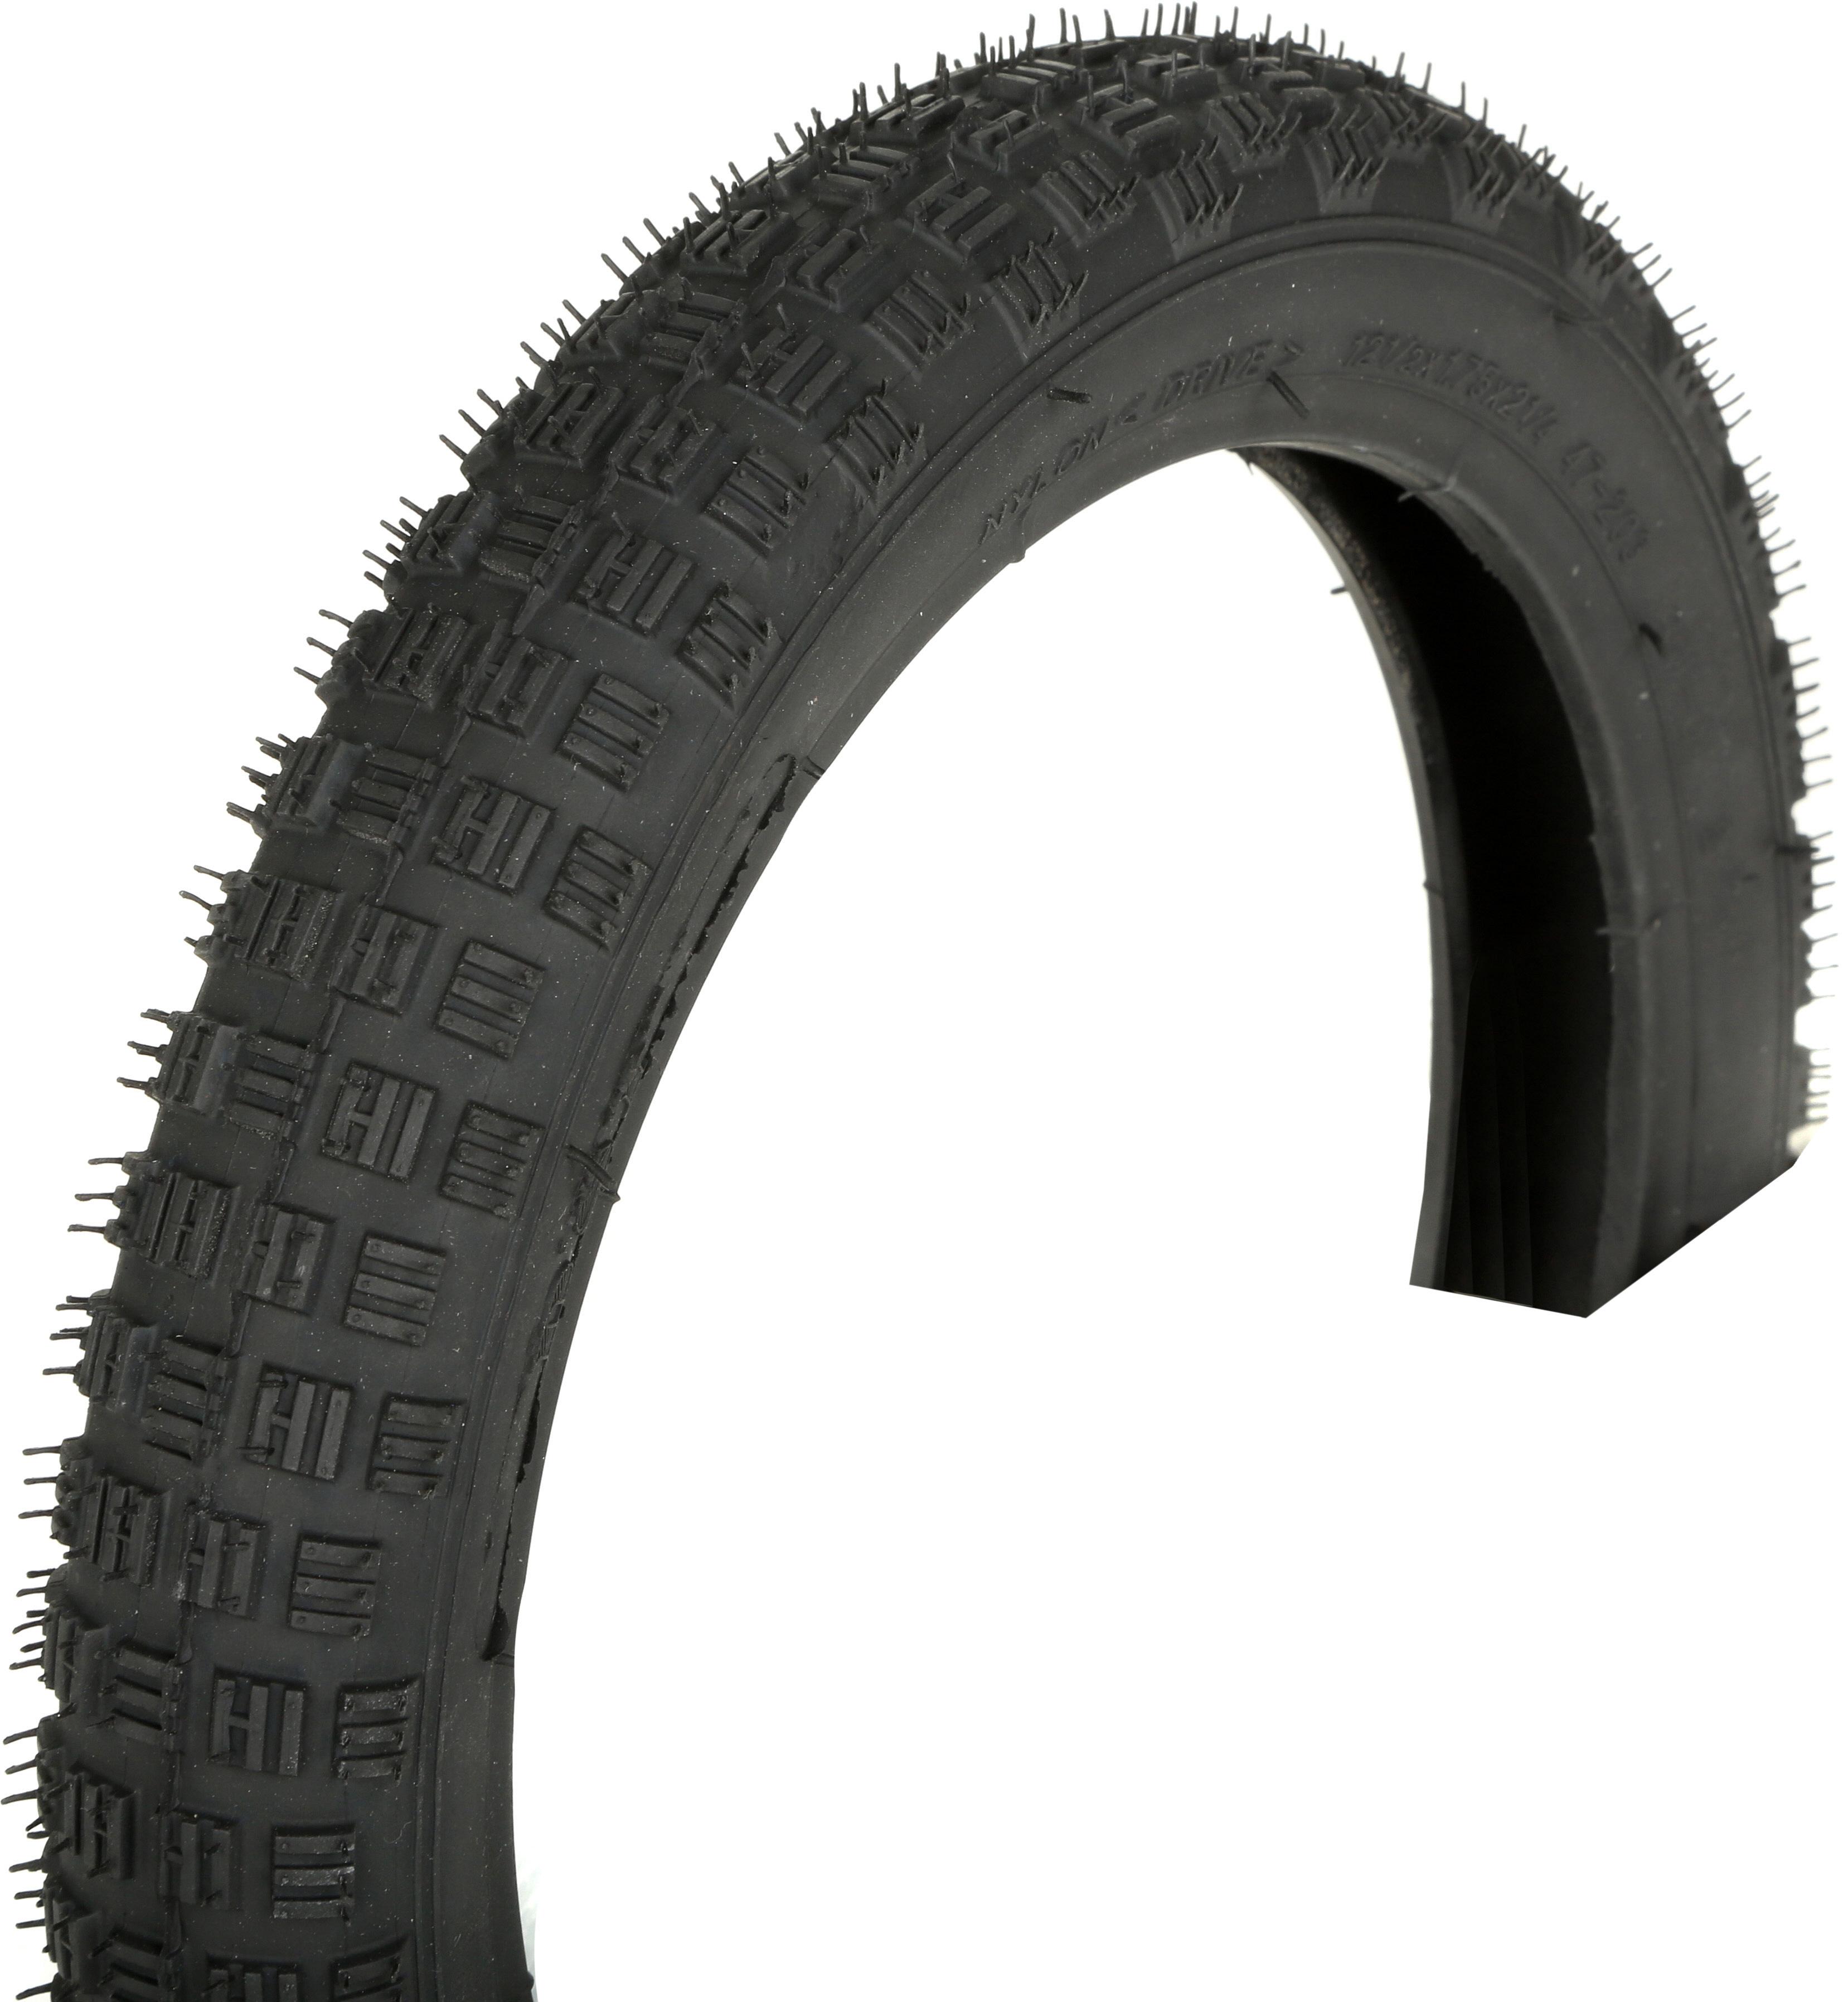 halfords bike tyres 26 x 1.95